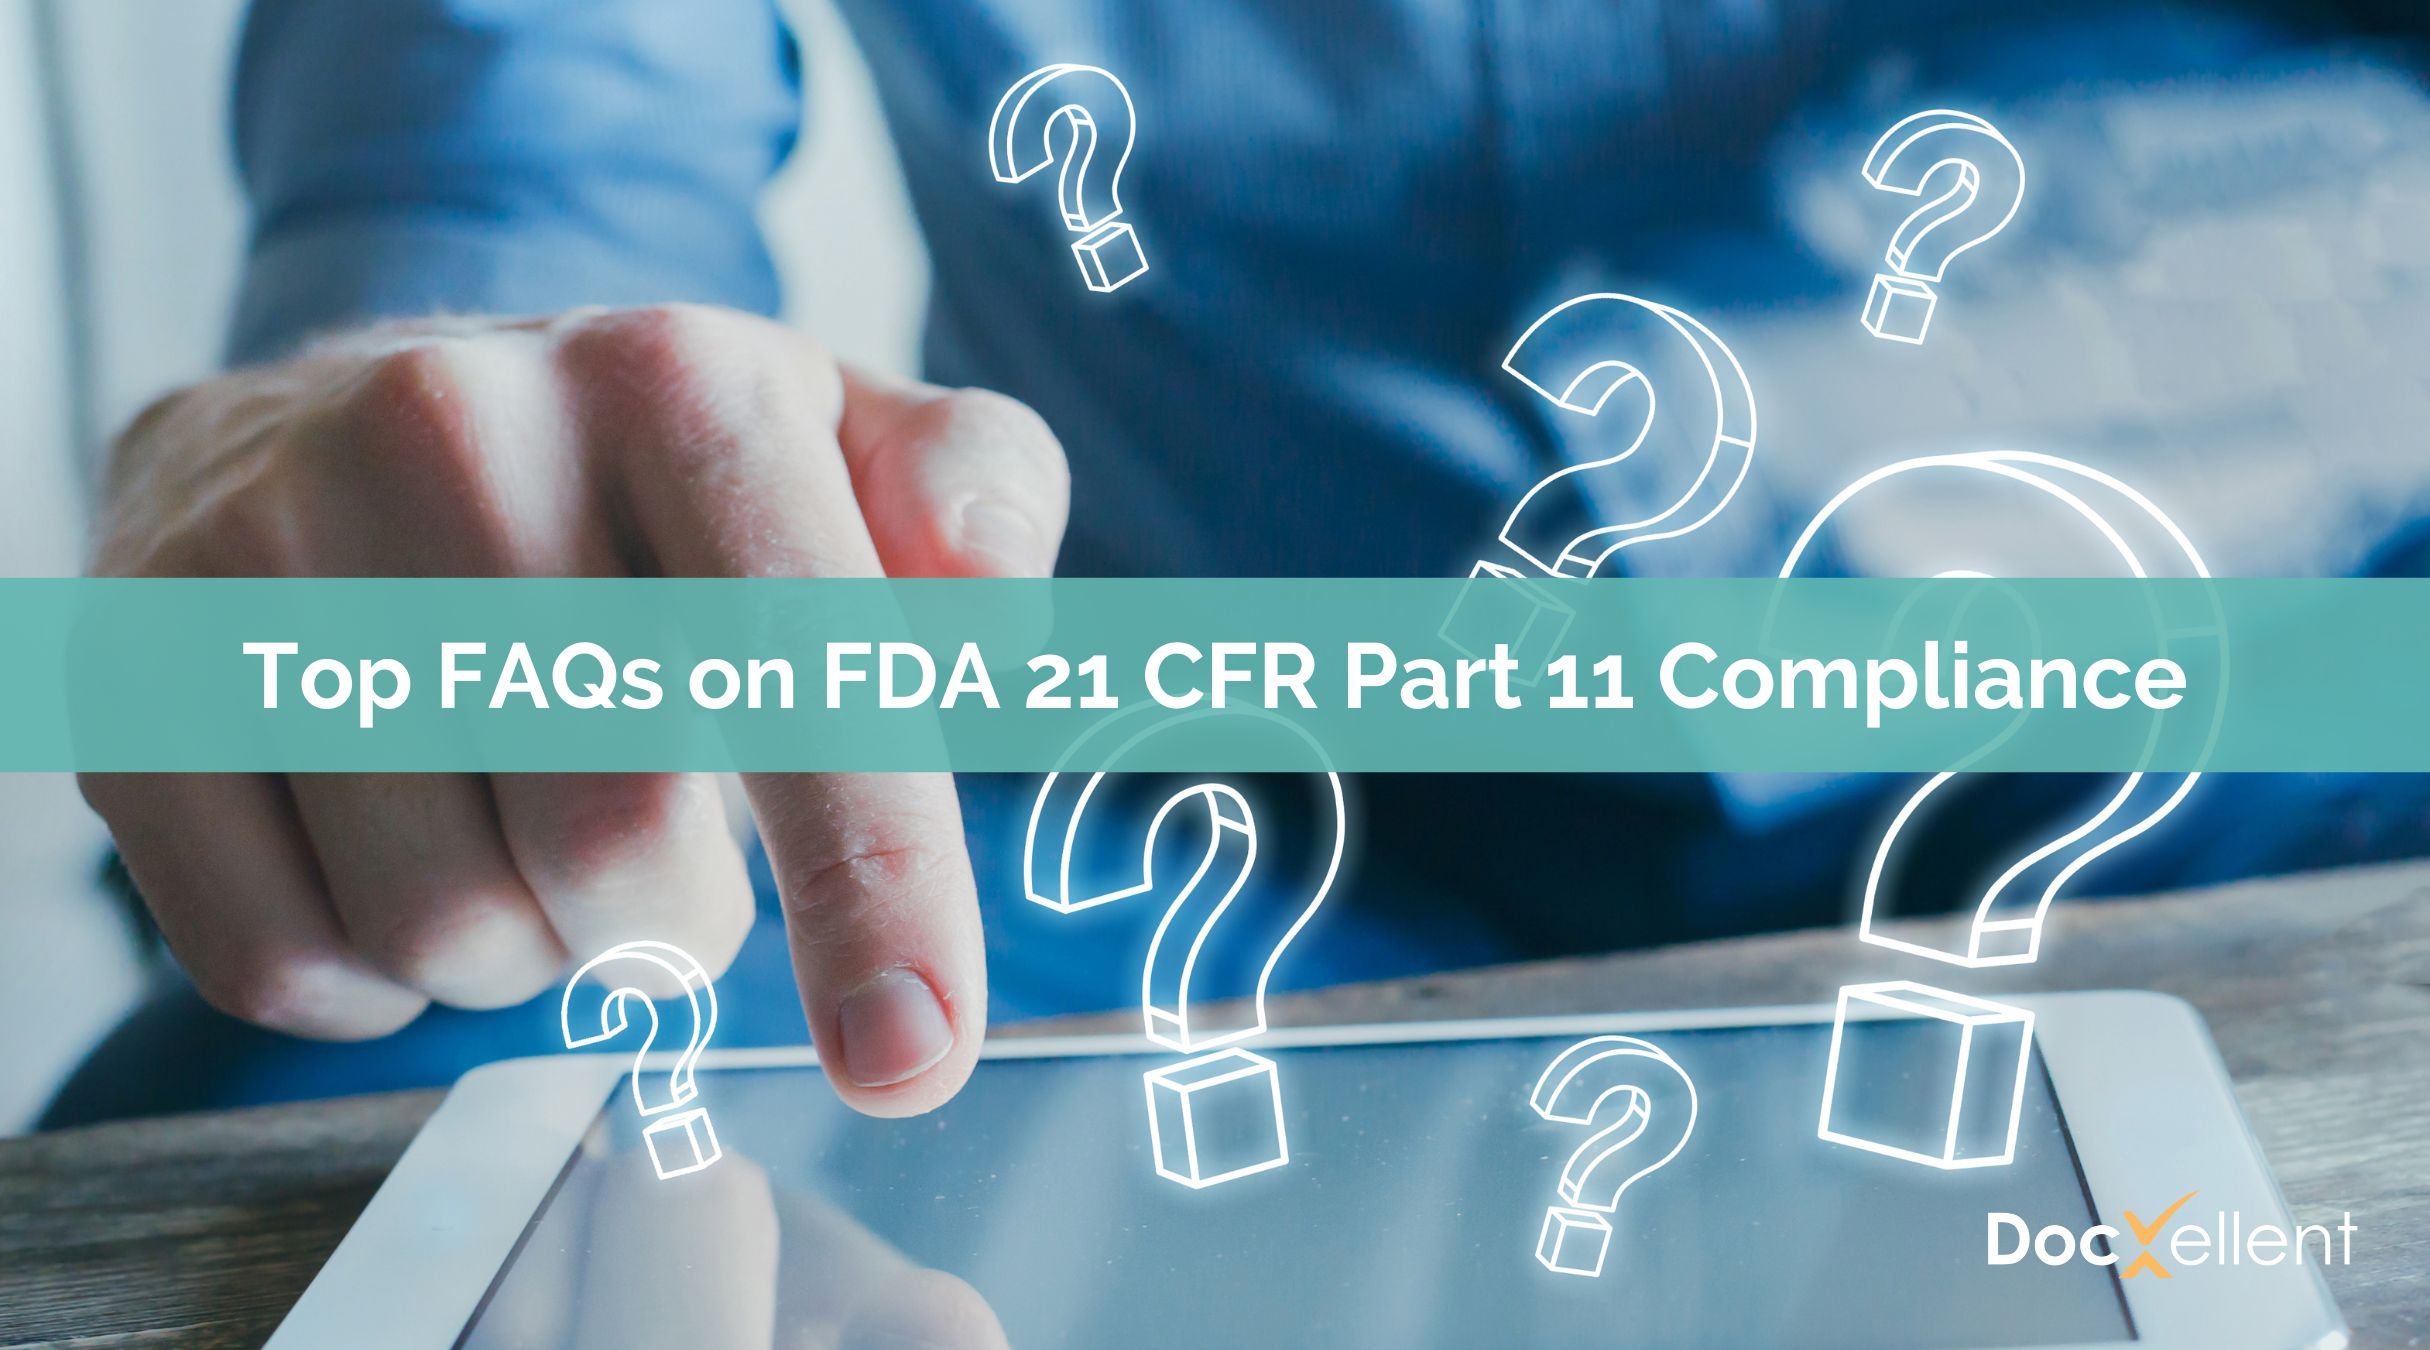 9  FAQs on FDA 21 CFR Part 11 Compliance Document Control